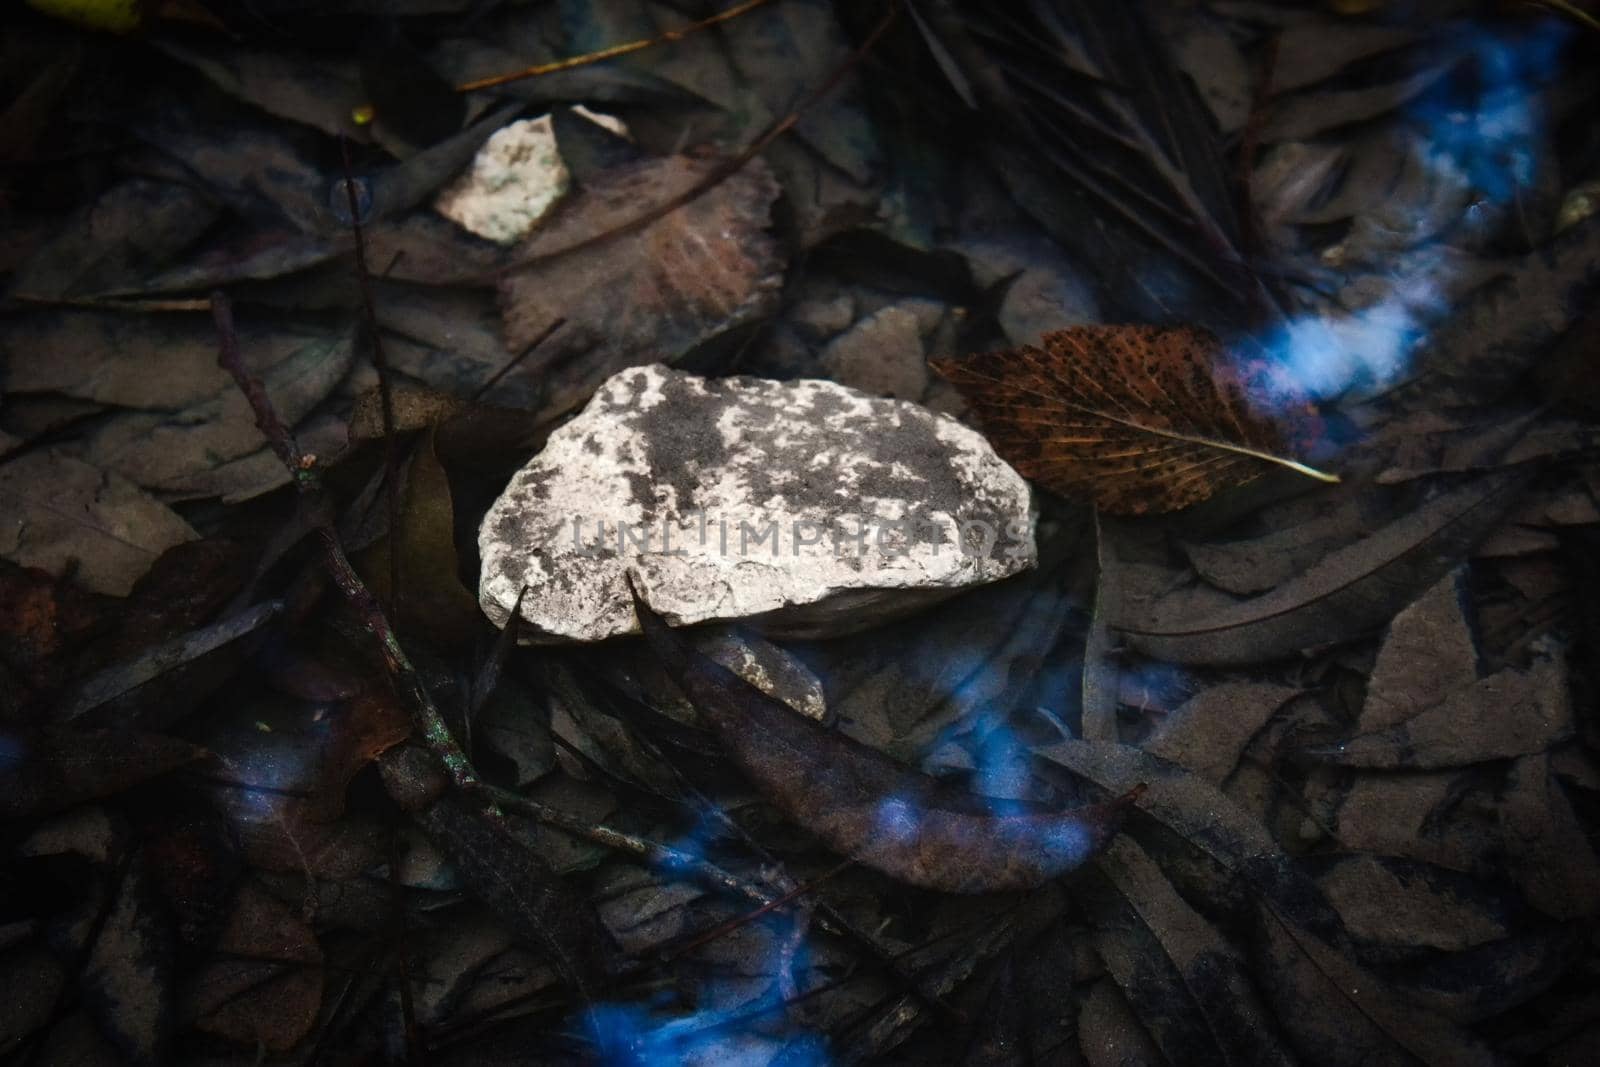 A white rock in a stream full of fallen leaves